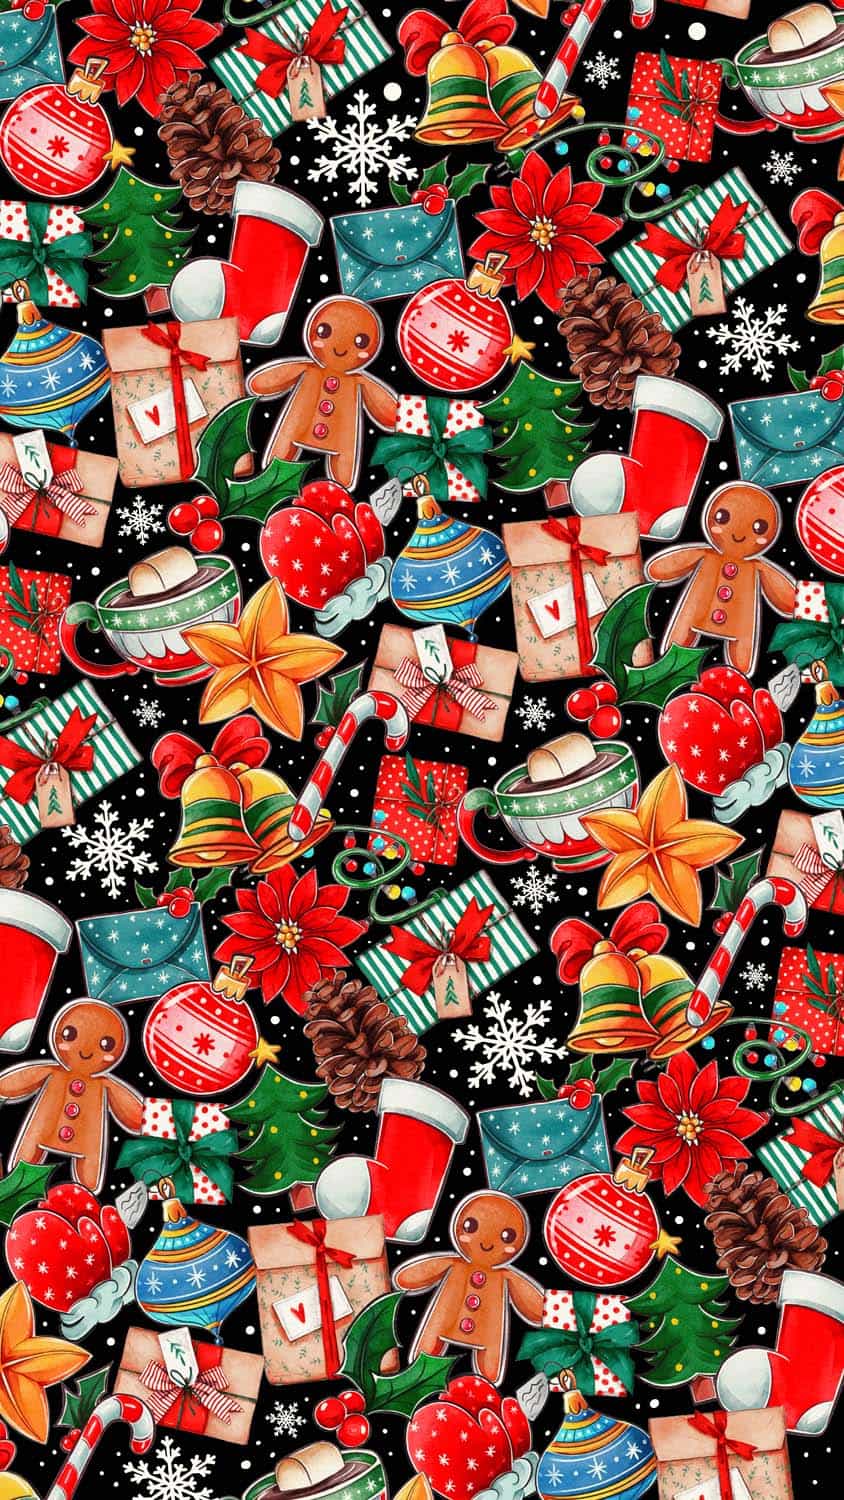 Christmas Art iPhone Wallpaper